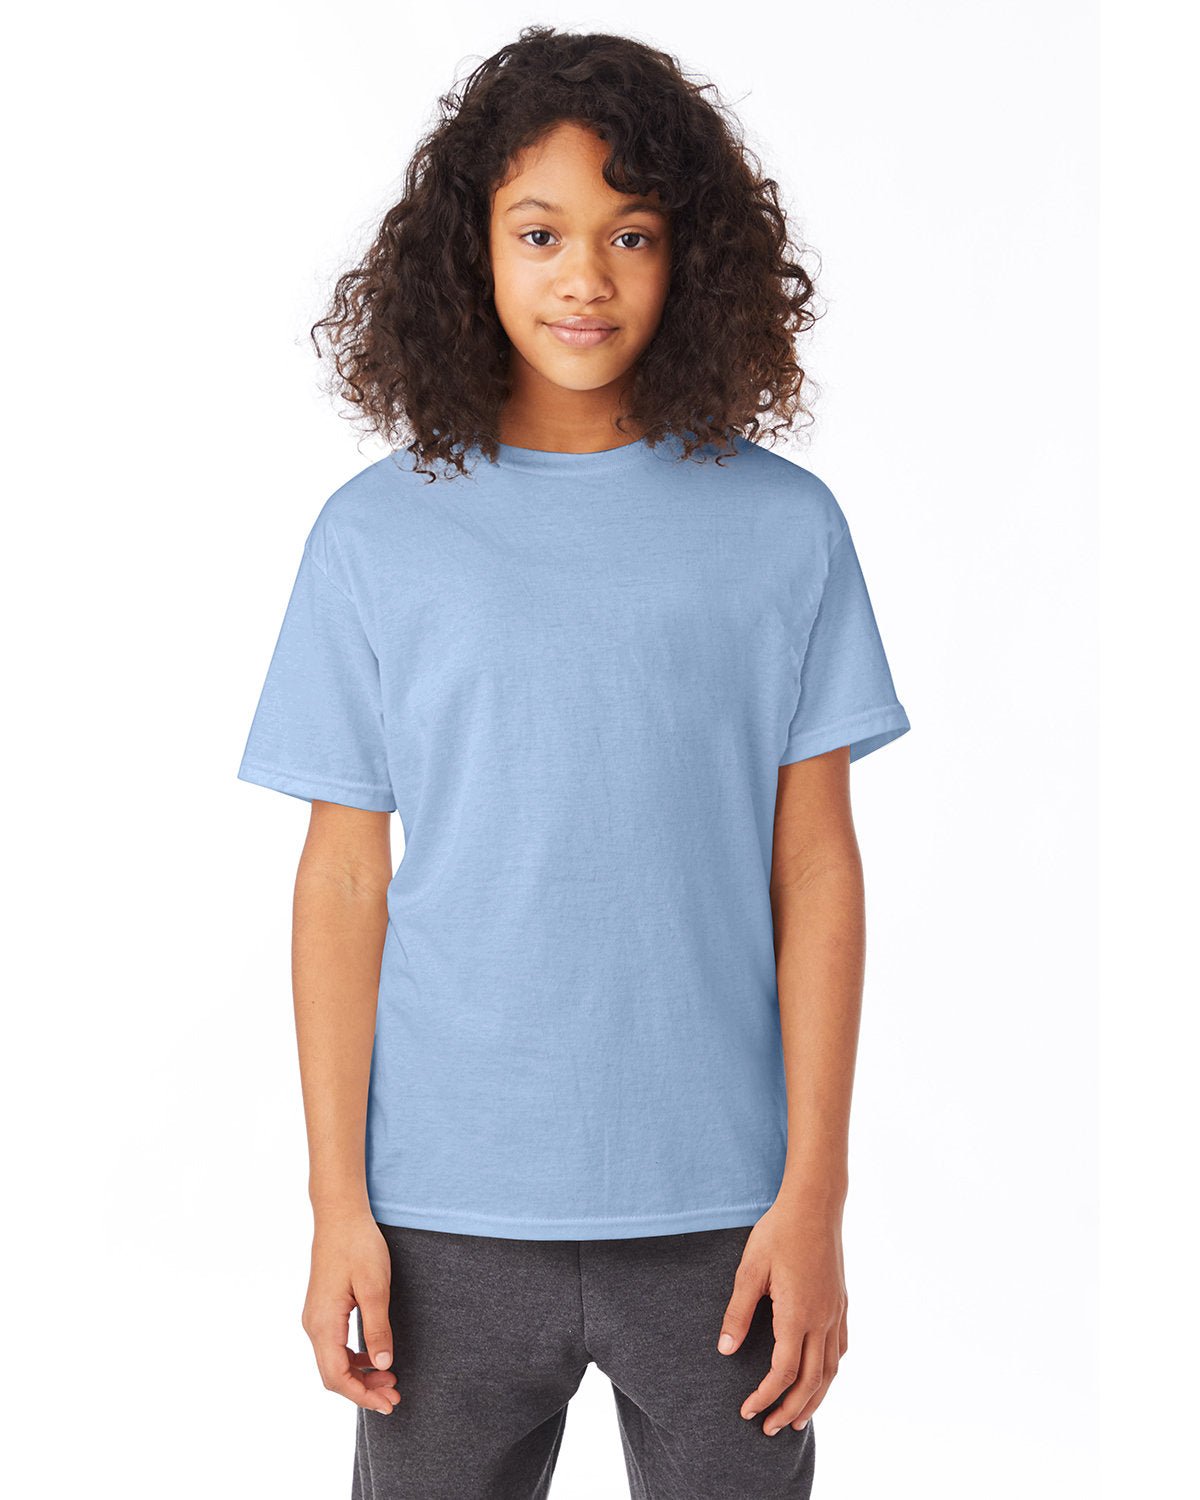 5370-Hanes-LIGHT BLUE-Hanes-T-Shirts-1